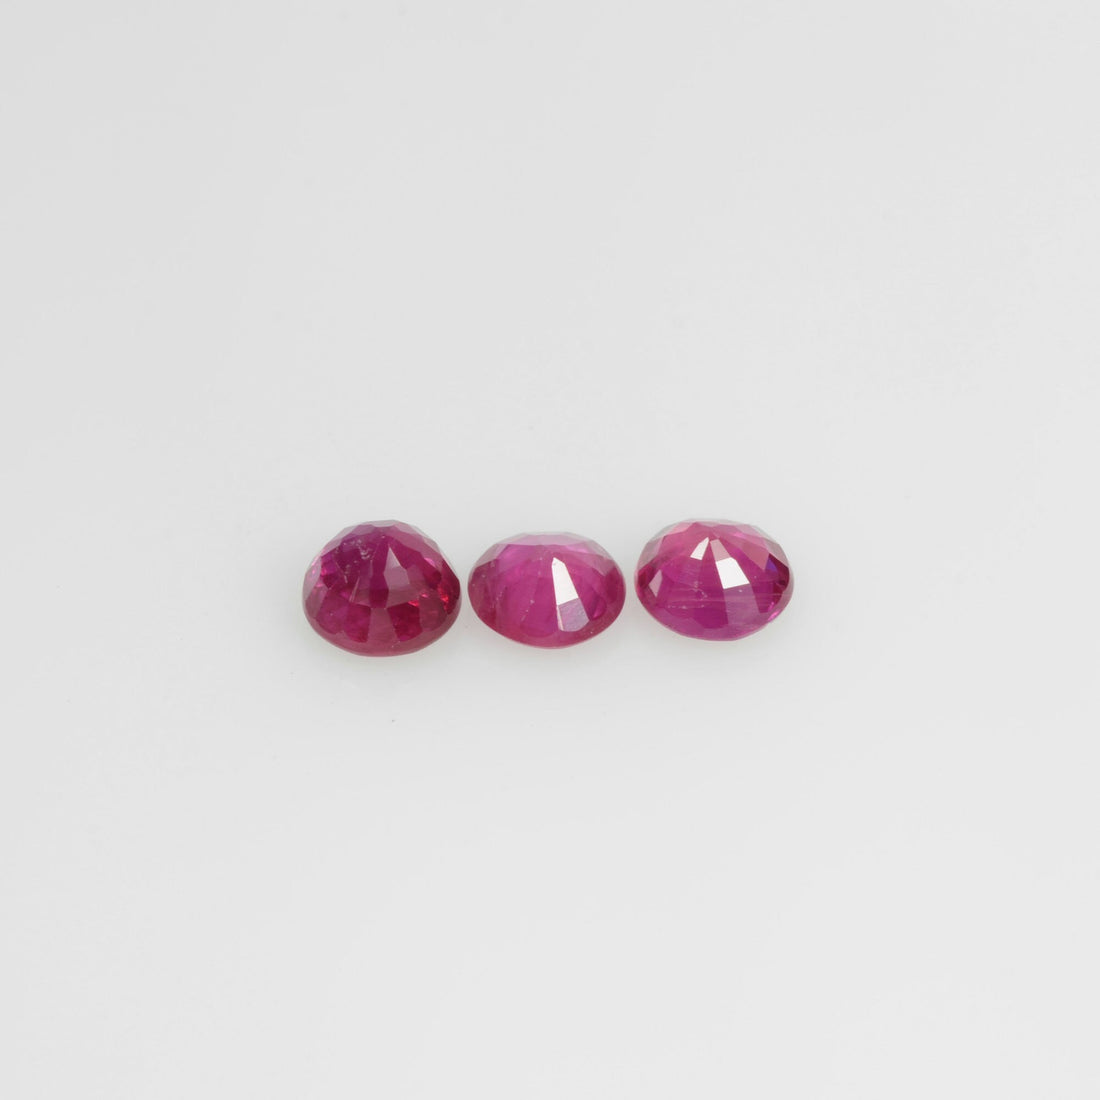 3.2-4.4 mm Natural Ruby Loose Gemstone Round Cut